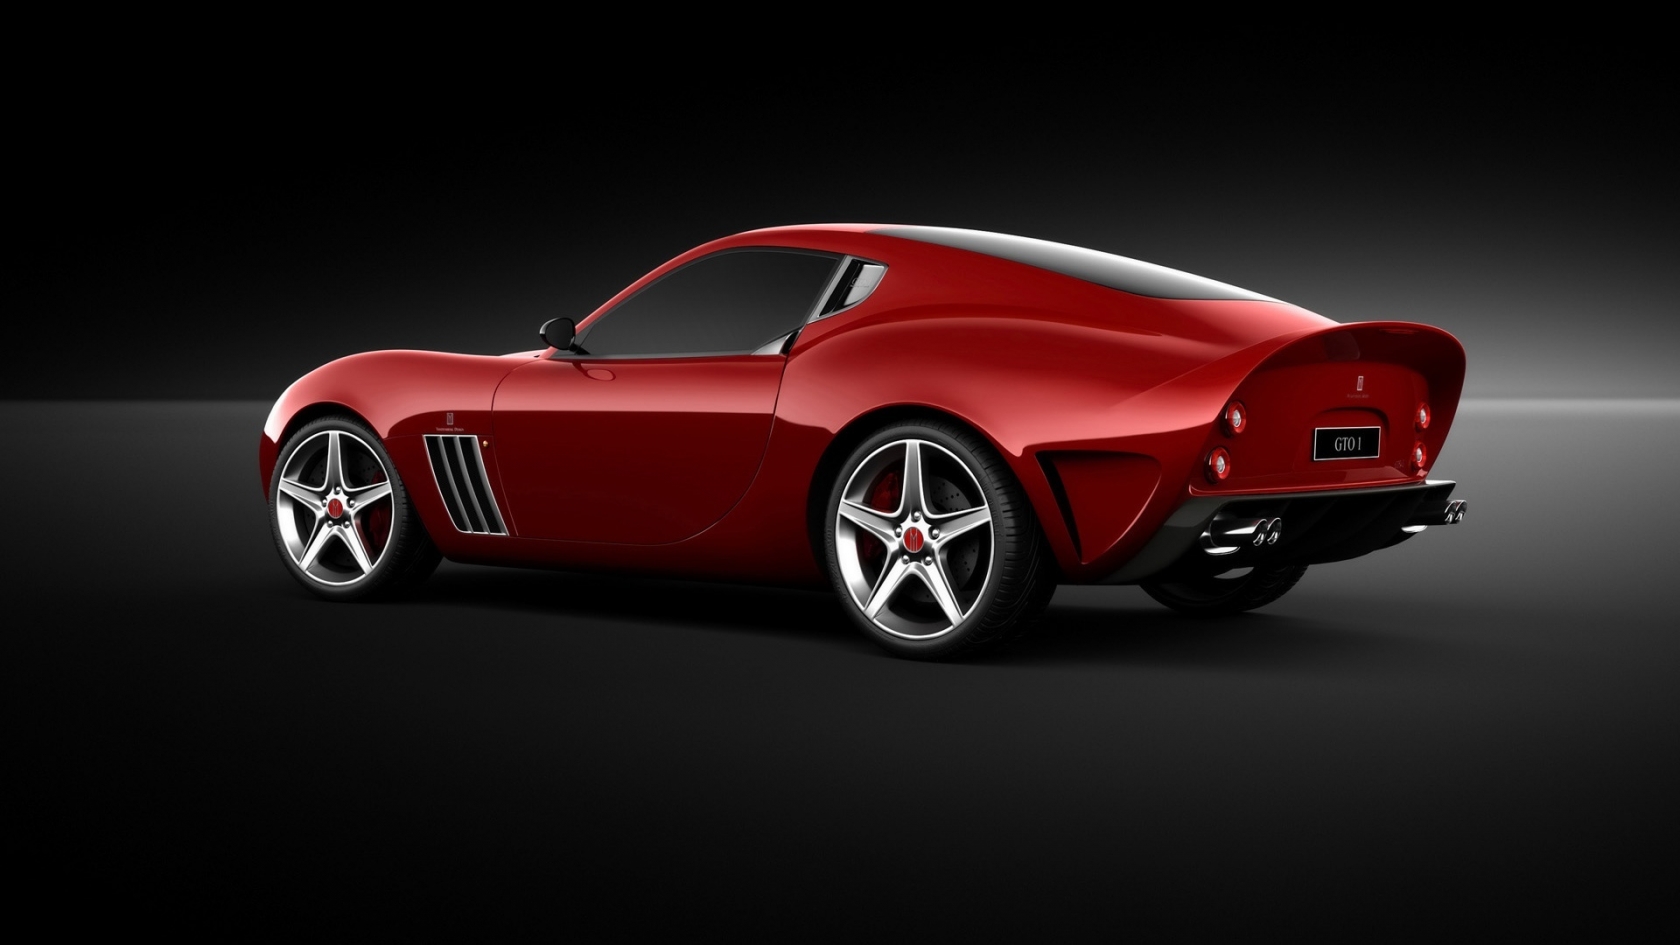 Ferrari Vandenbrink 599 GTO 2009 for 1680 x 945 HDTV resolution